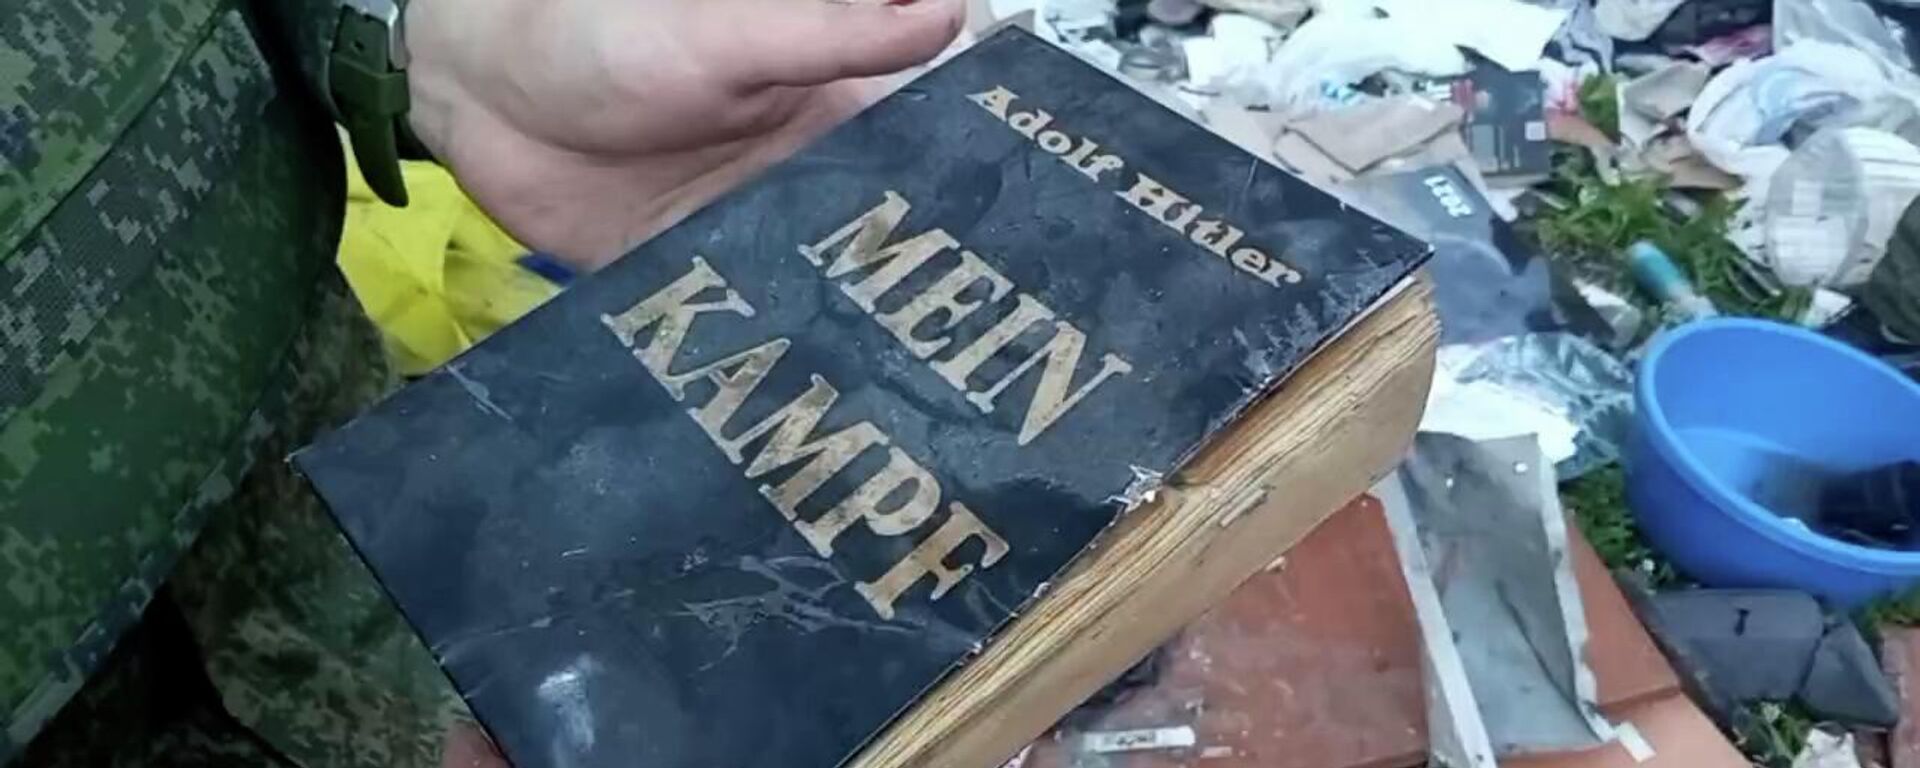 Книга Гитлера Mein Kampf найдена в Мариуполе на базе националистов Азова - Sputnik Latvija, 1920, 29.04.2022